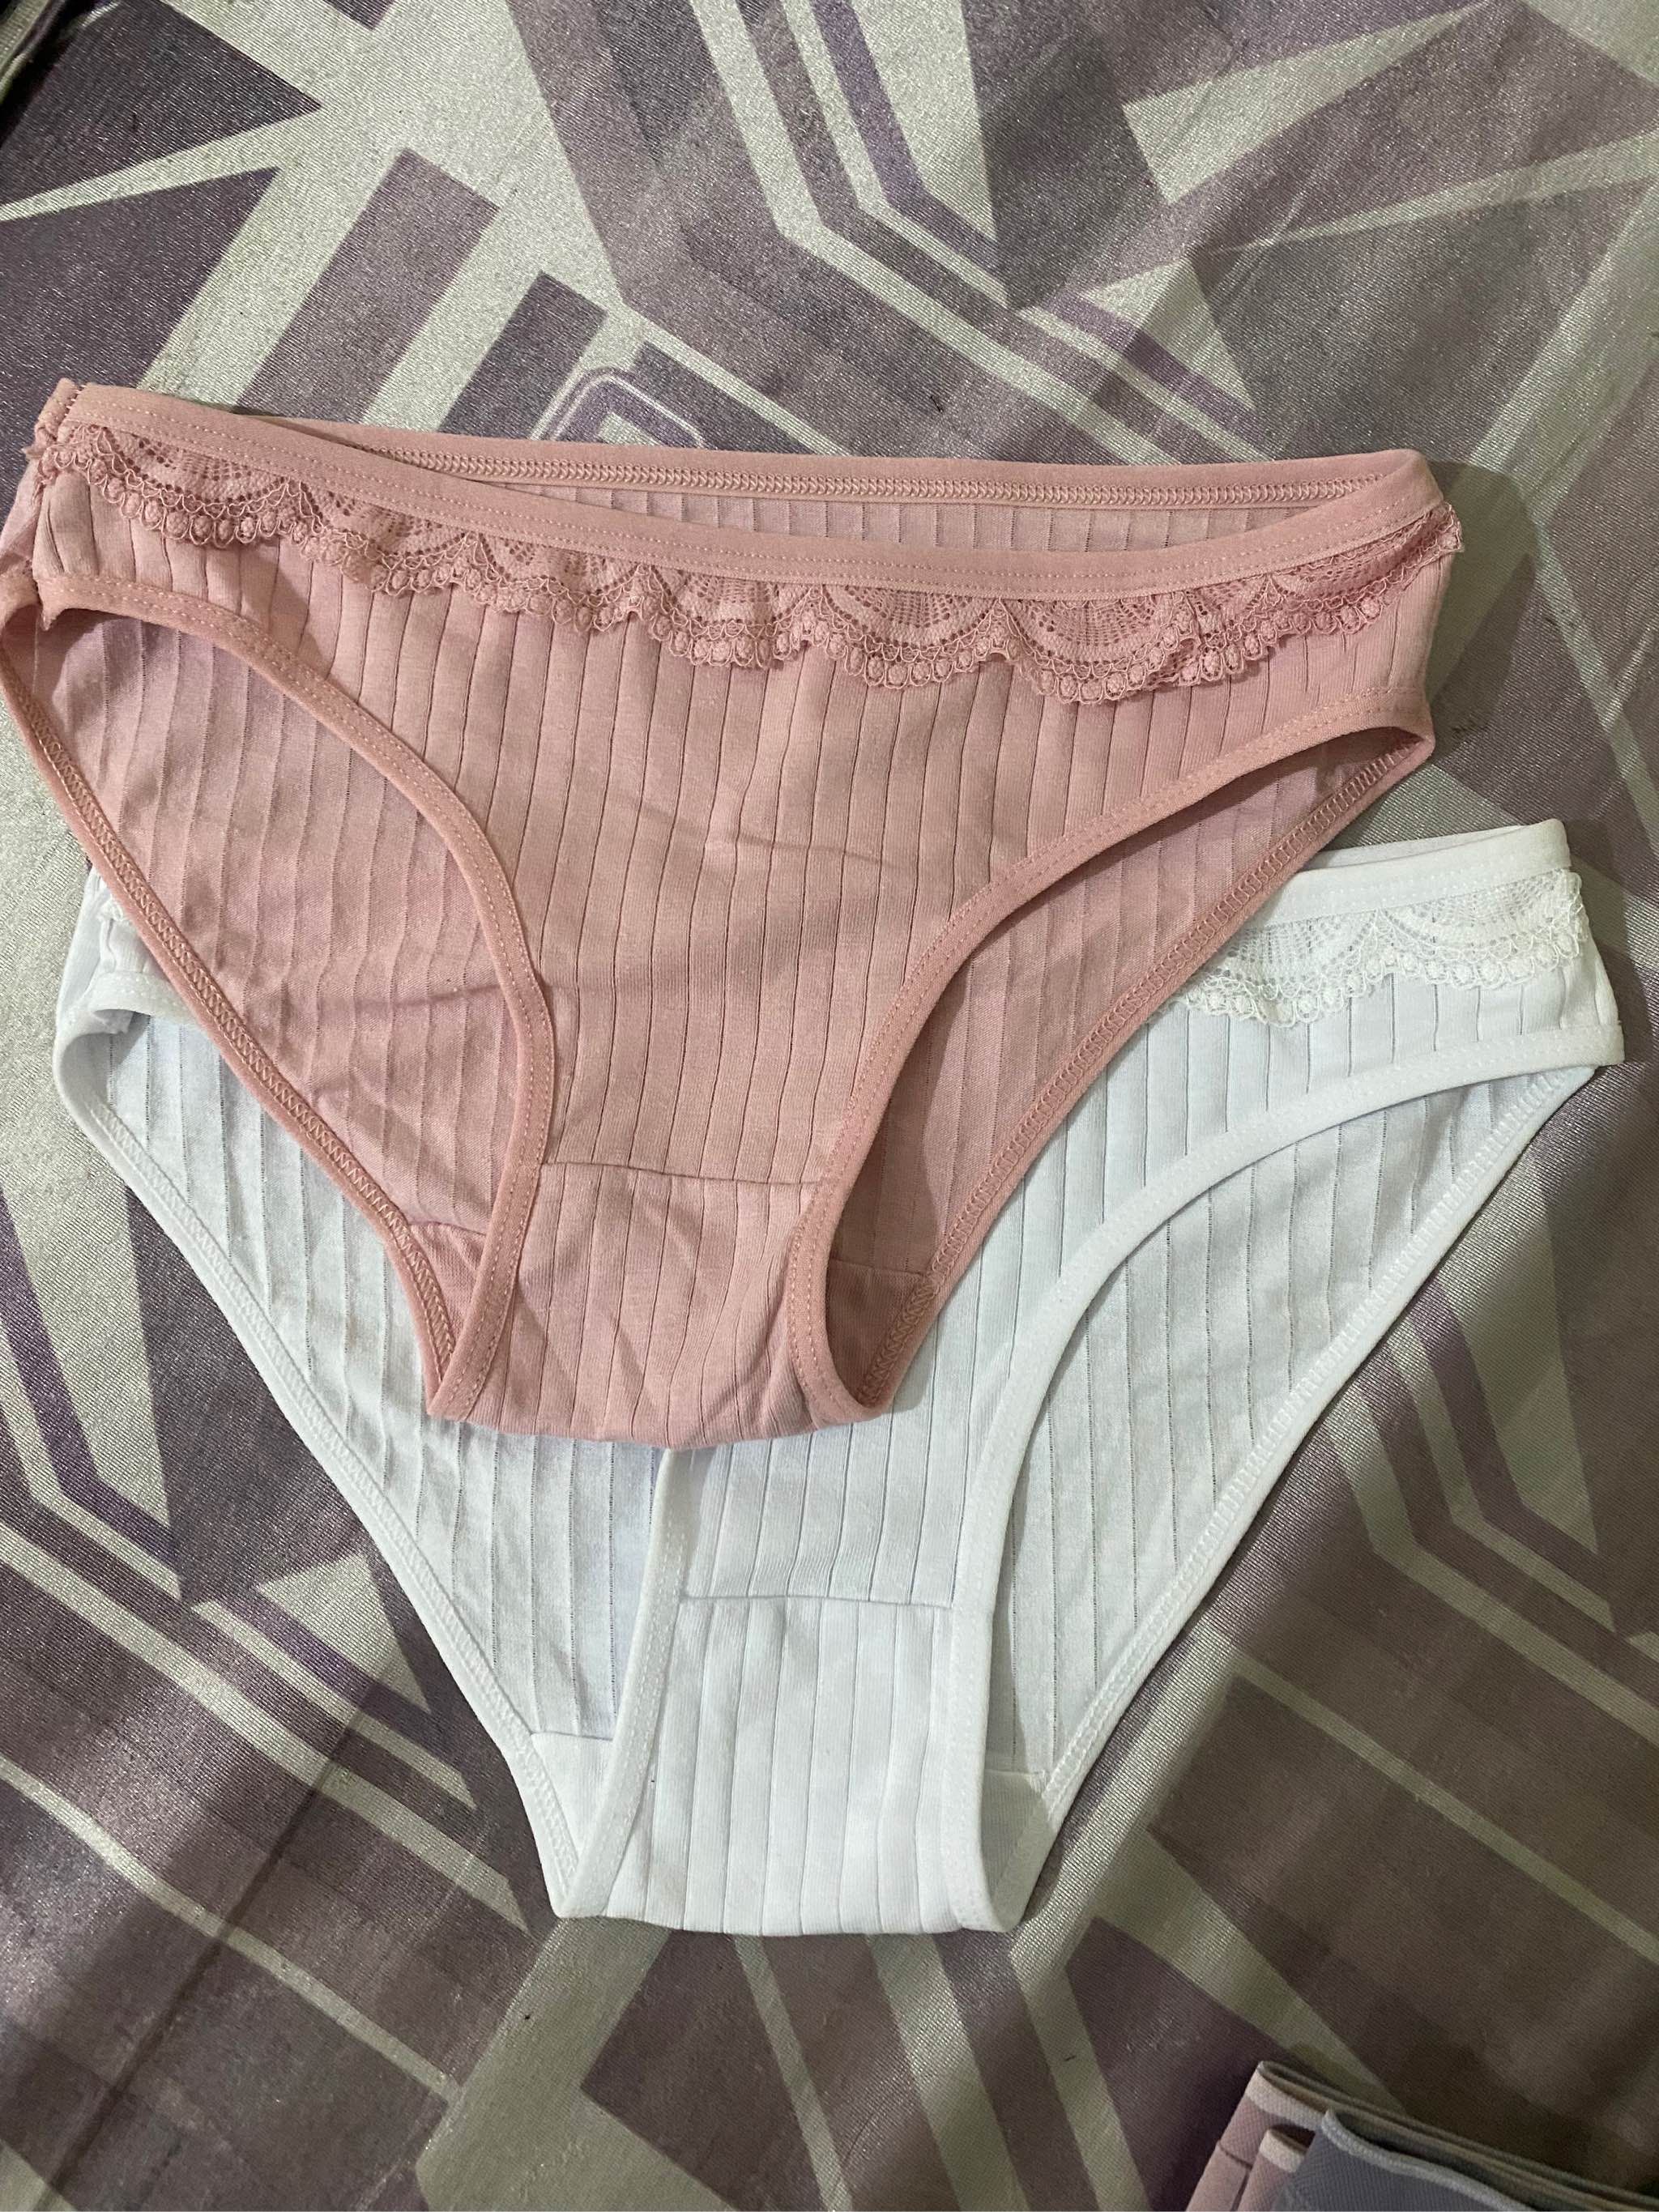 SMY Pack of 2 - Lace Waist Ladies Panties Stripe Cotton Female Lingeries Cute  Girls Underwear